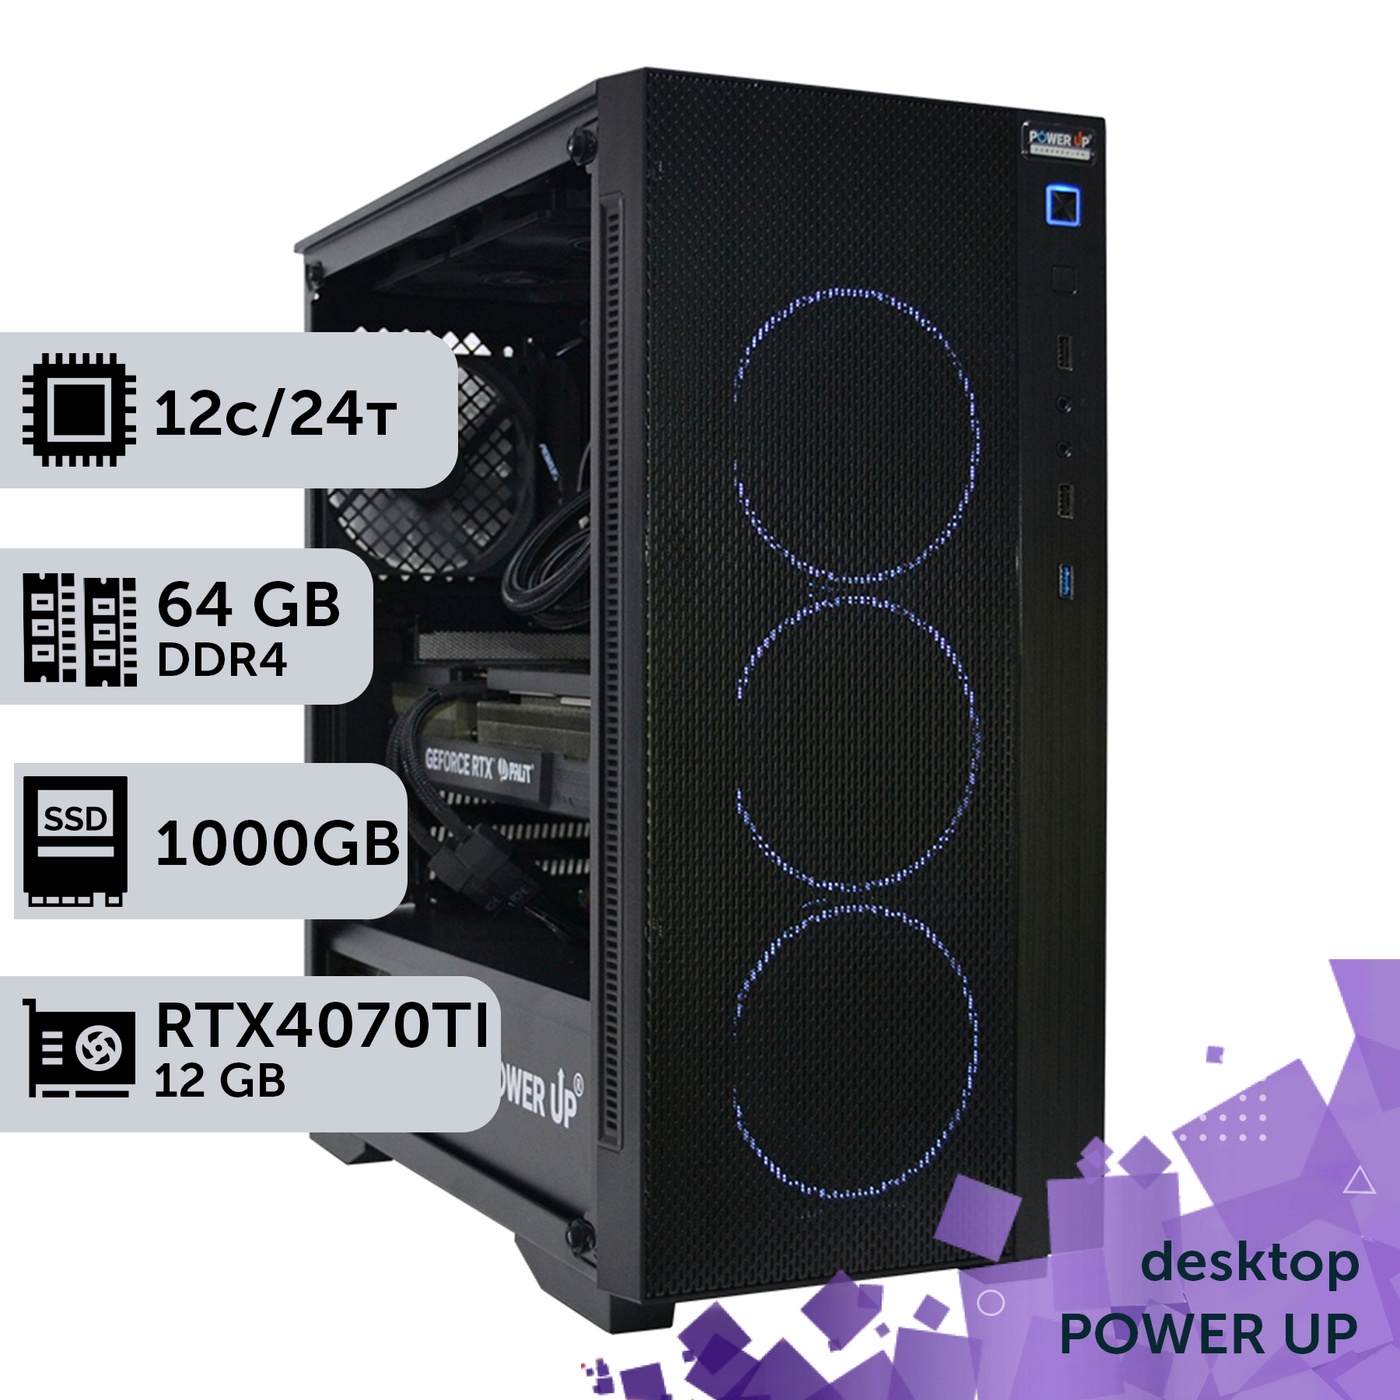 Рабочая станция PowerUp Desktop #203 Ryzen 9 5900x/64 GB/HDD 2 TB/SSD 1TB/GeForce RTX 4070Ti 12GB